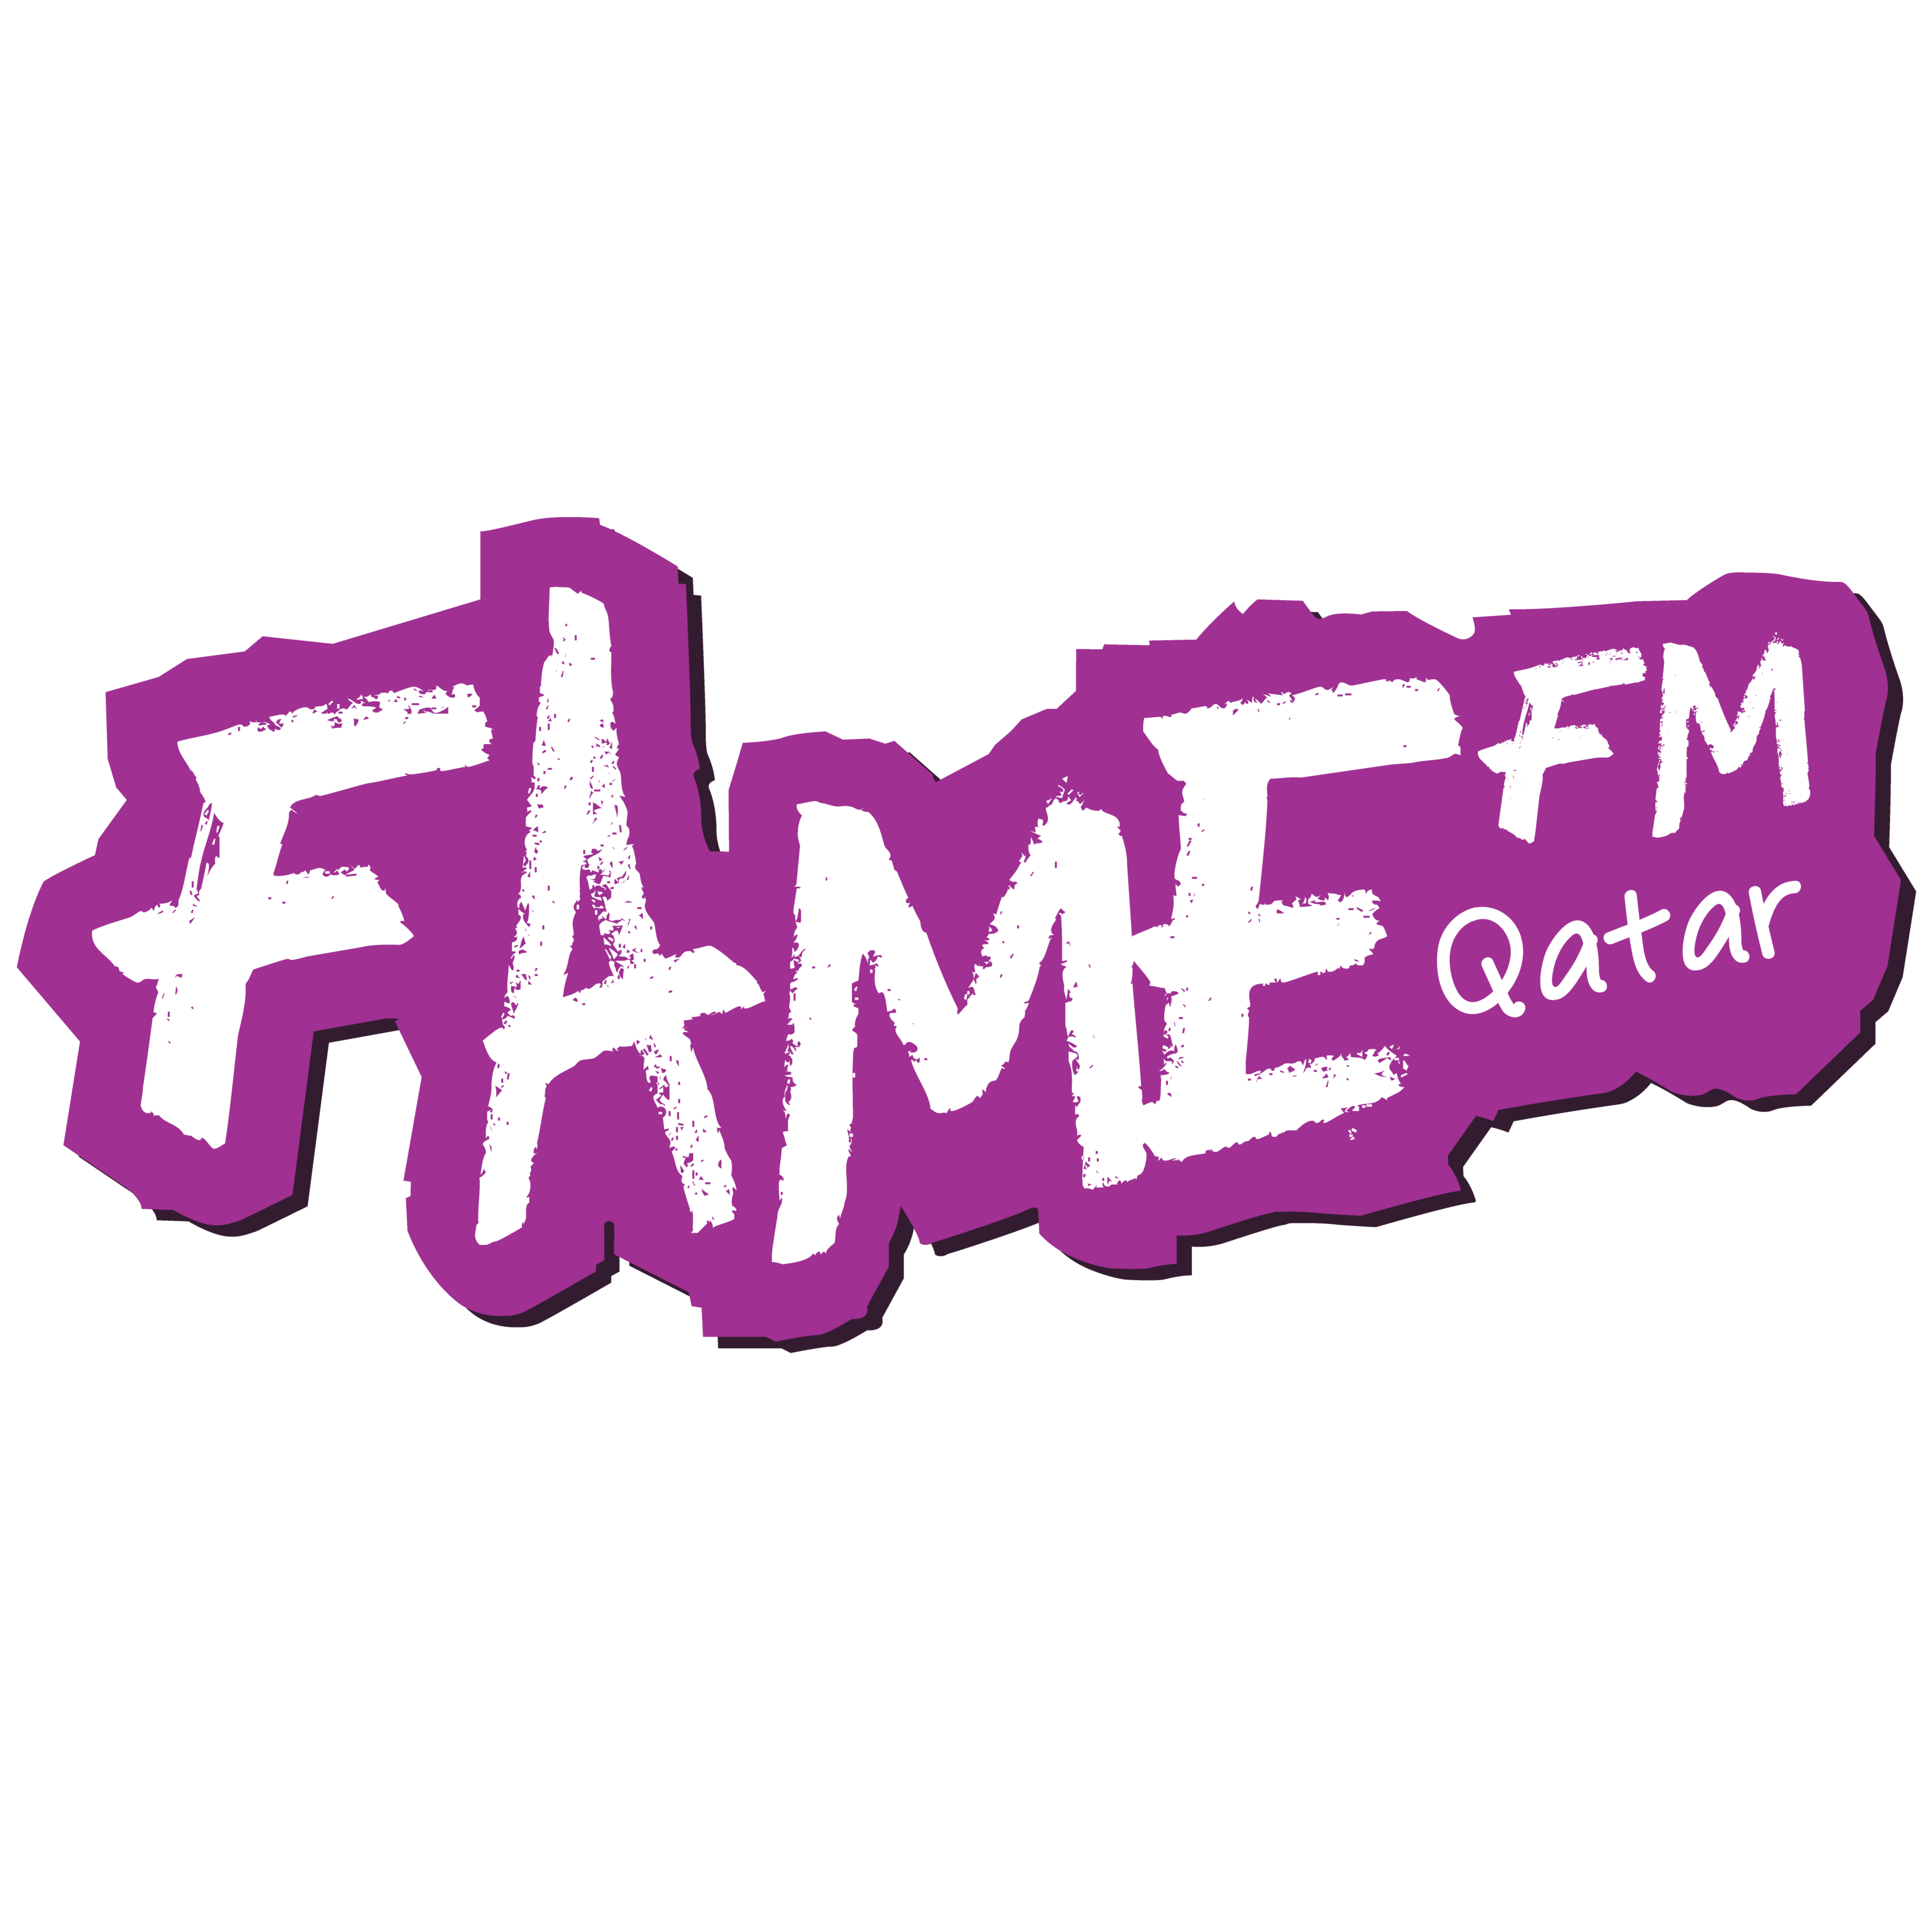 FAME FM Qatar